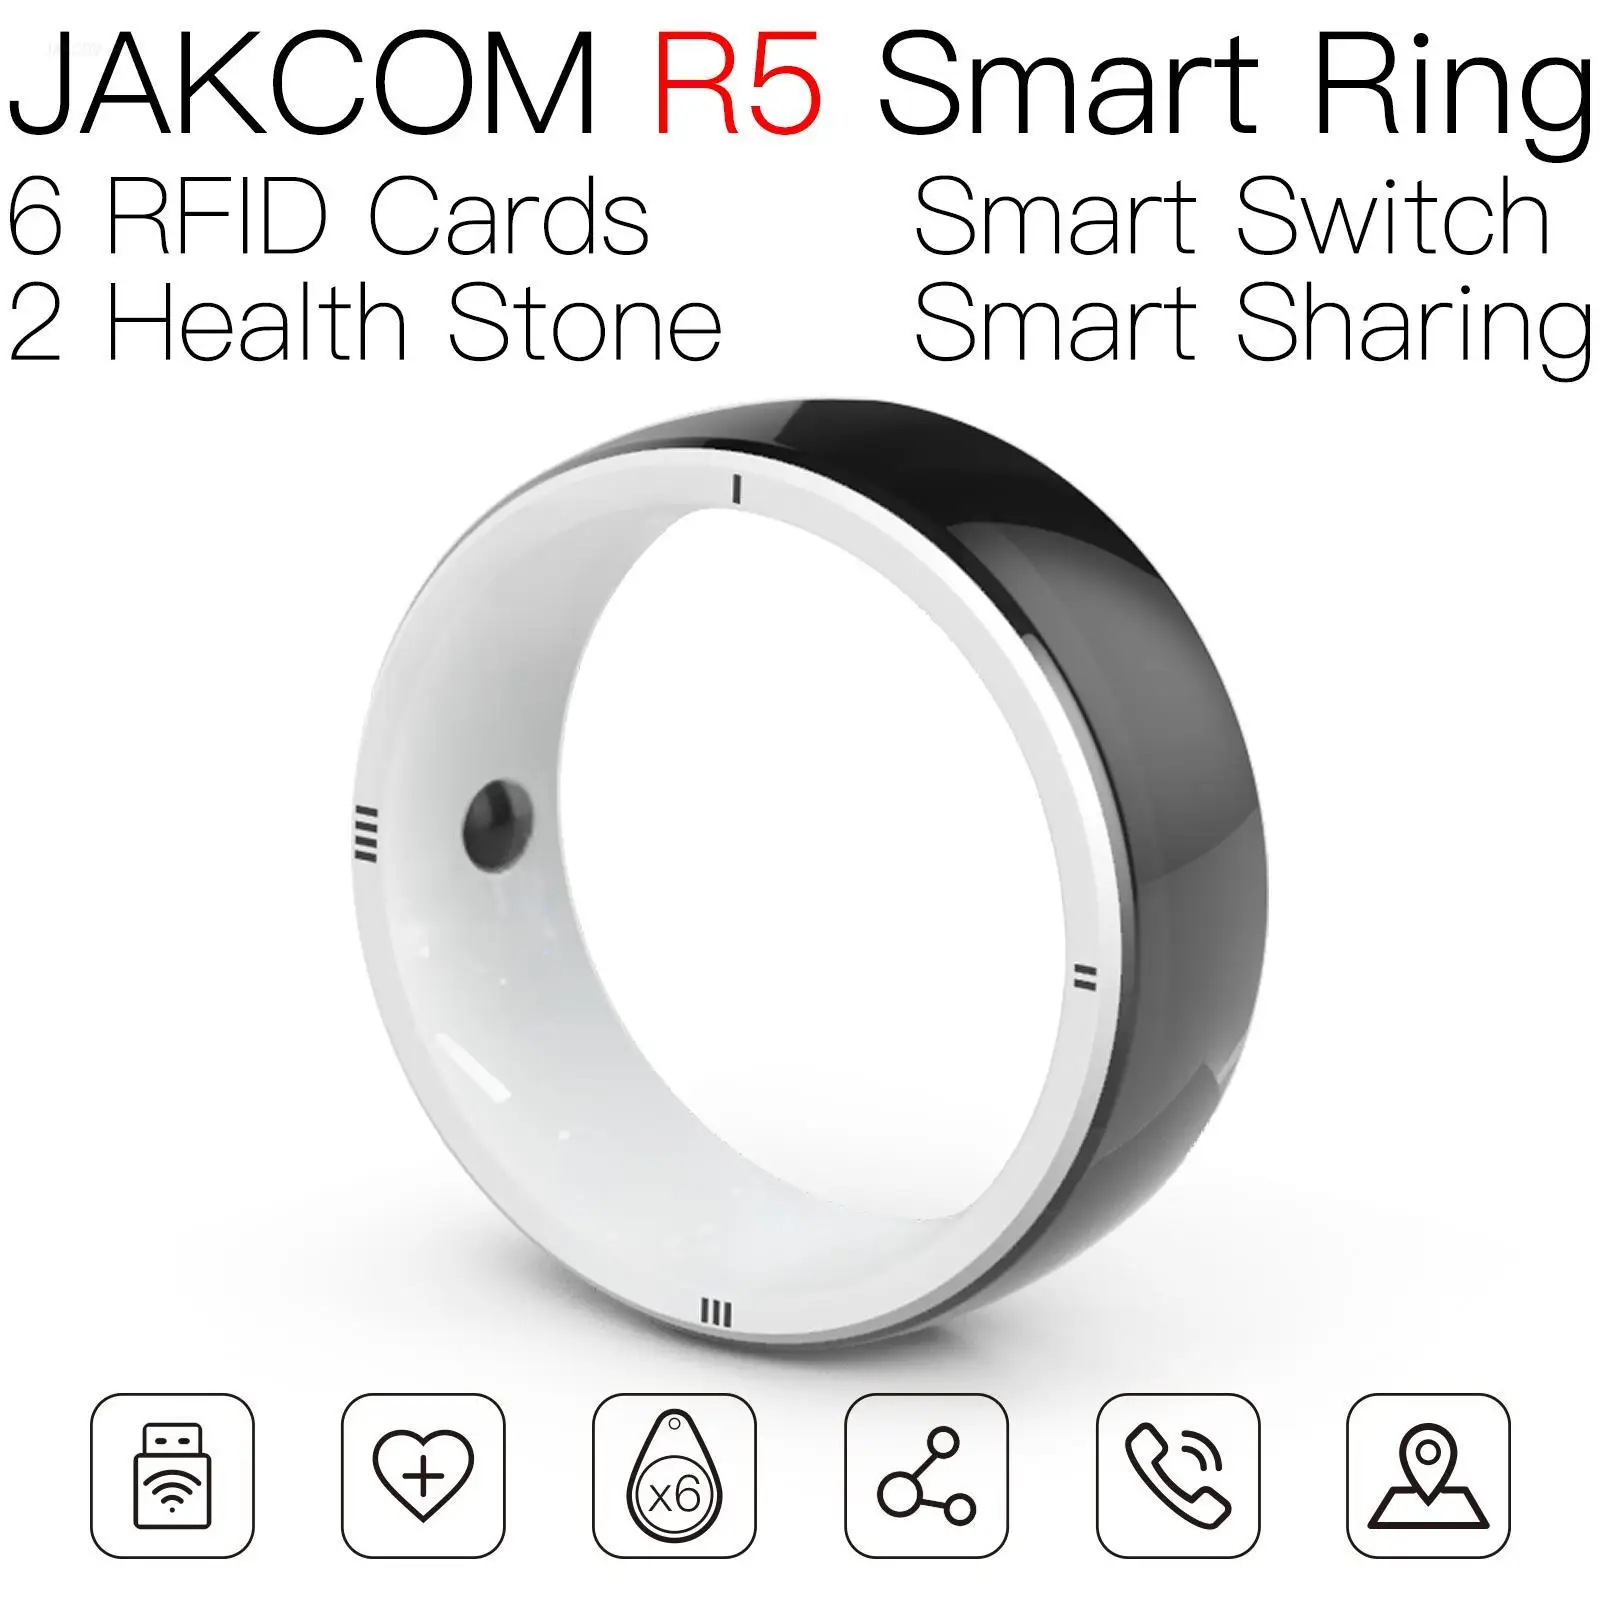 

JAKCOM R5 Smart Ring Super value than nfc visit card metal carte rare iso 50 tag rfid jewel reader magic vibration microchip